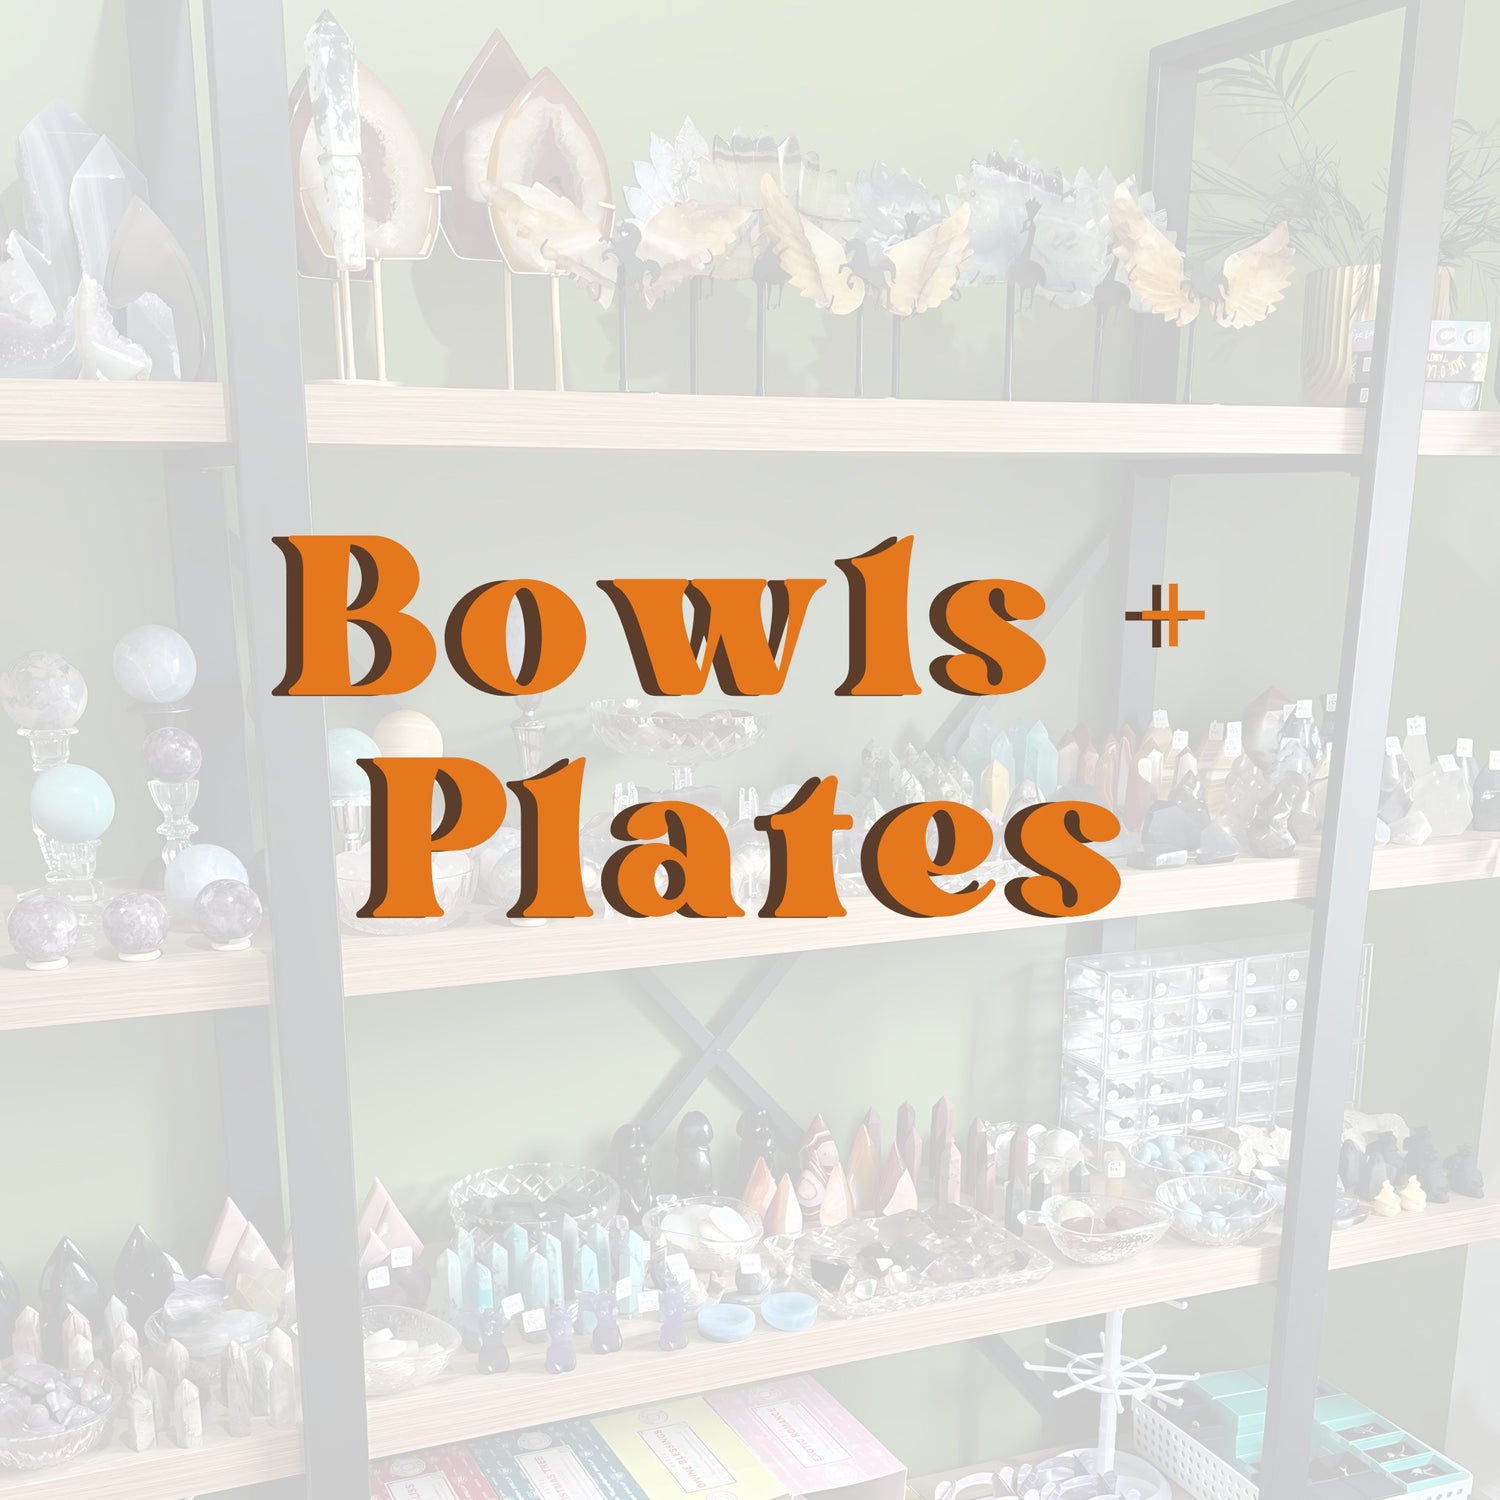 Bowls + Plates